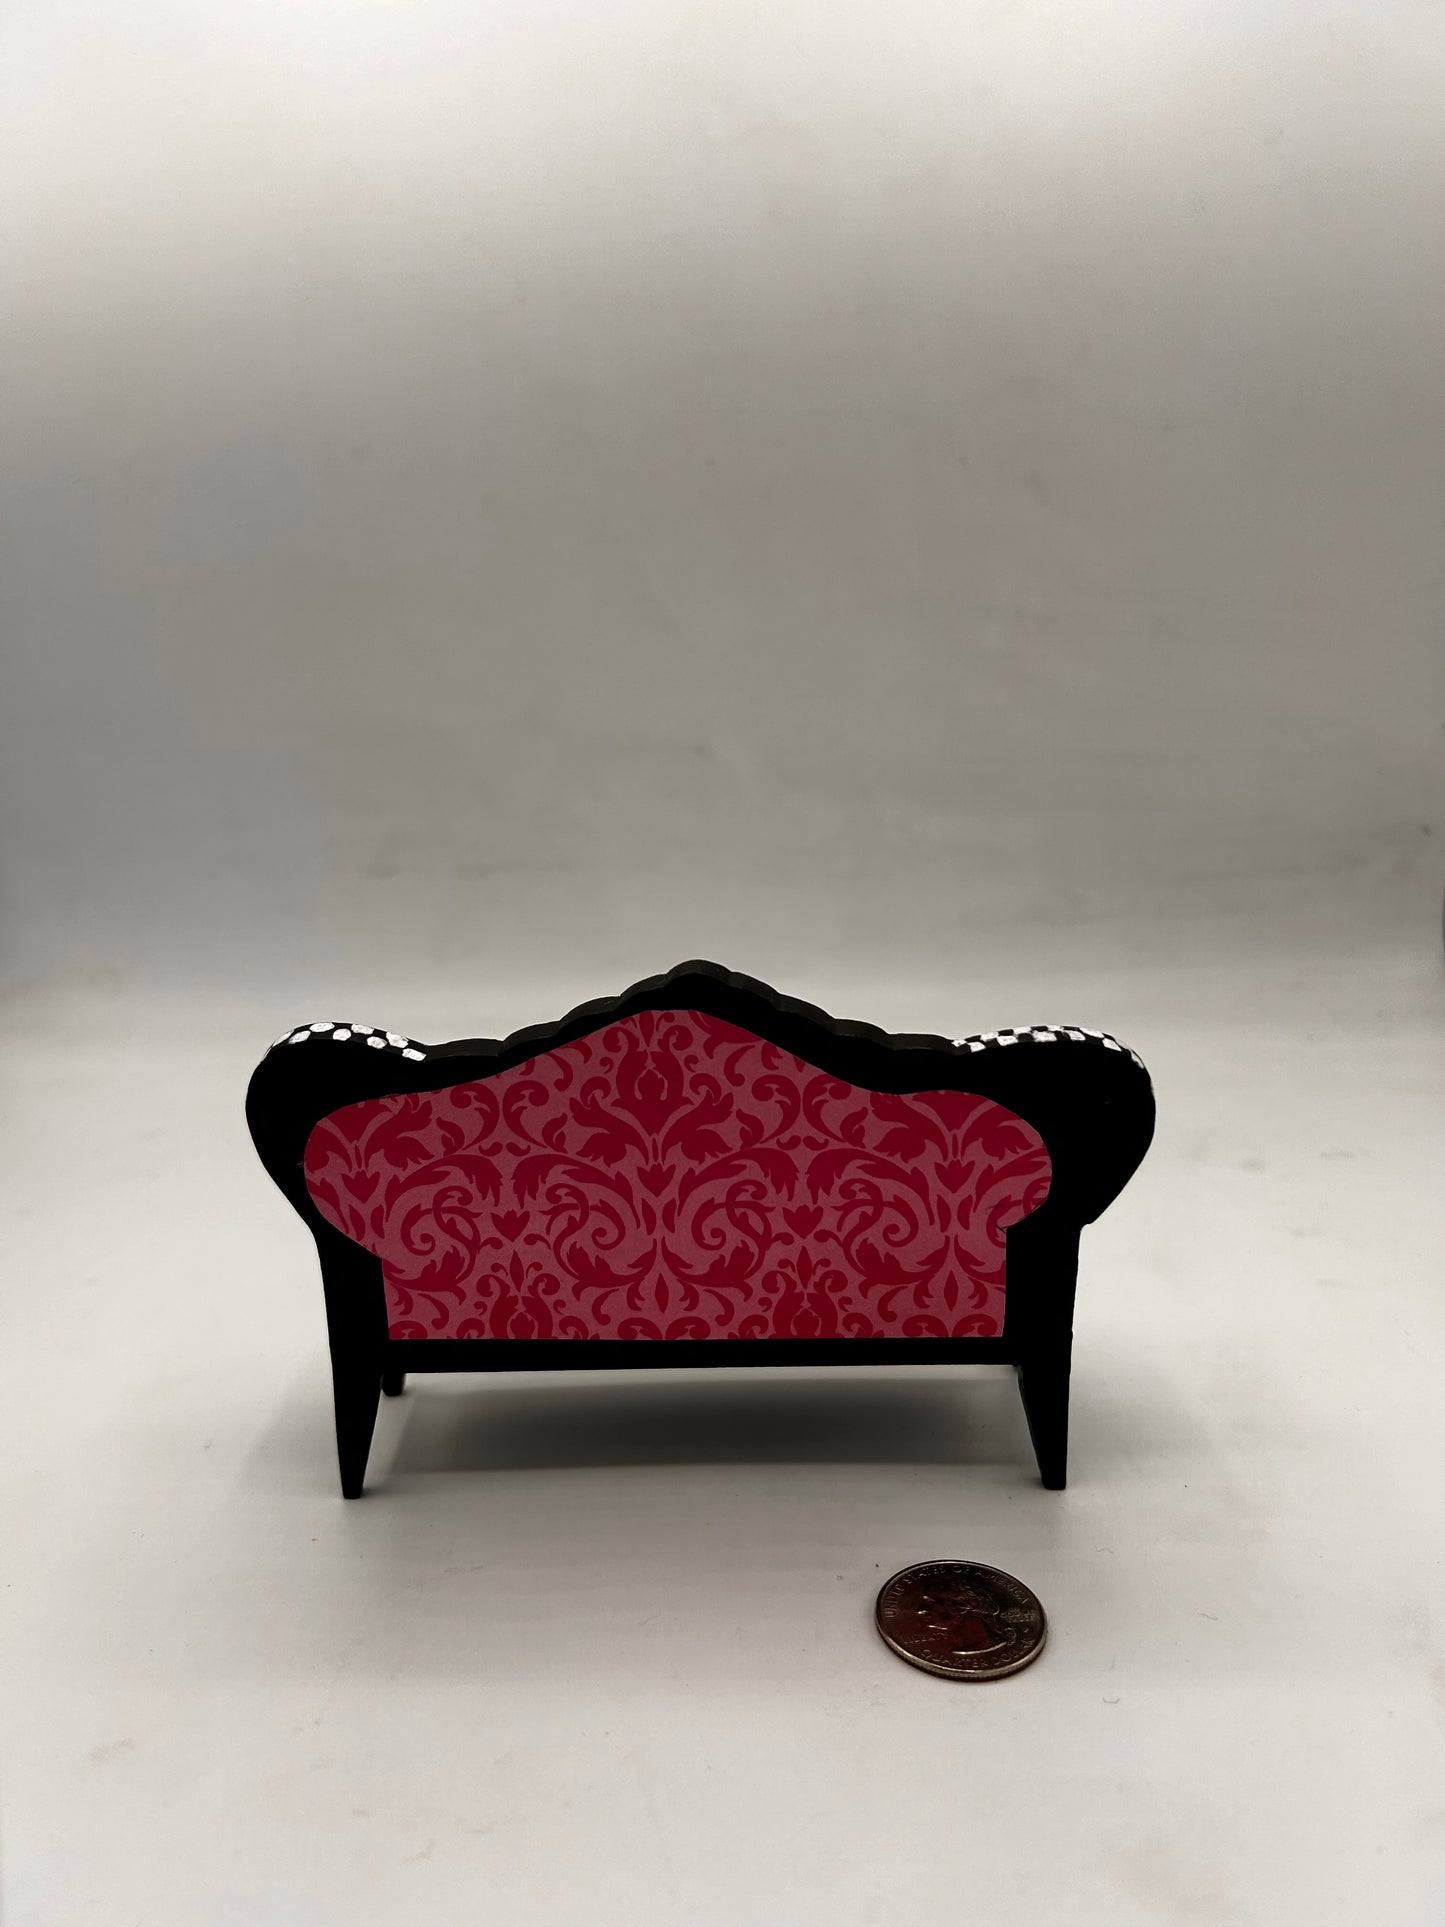 McKenzie-Childs Inspired Upholstered Sofa